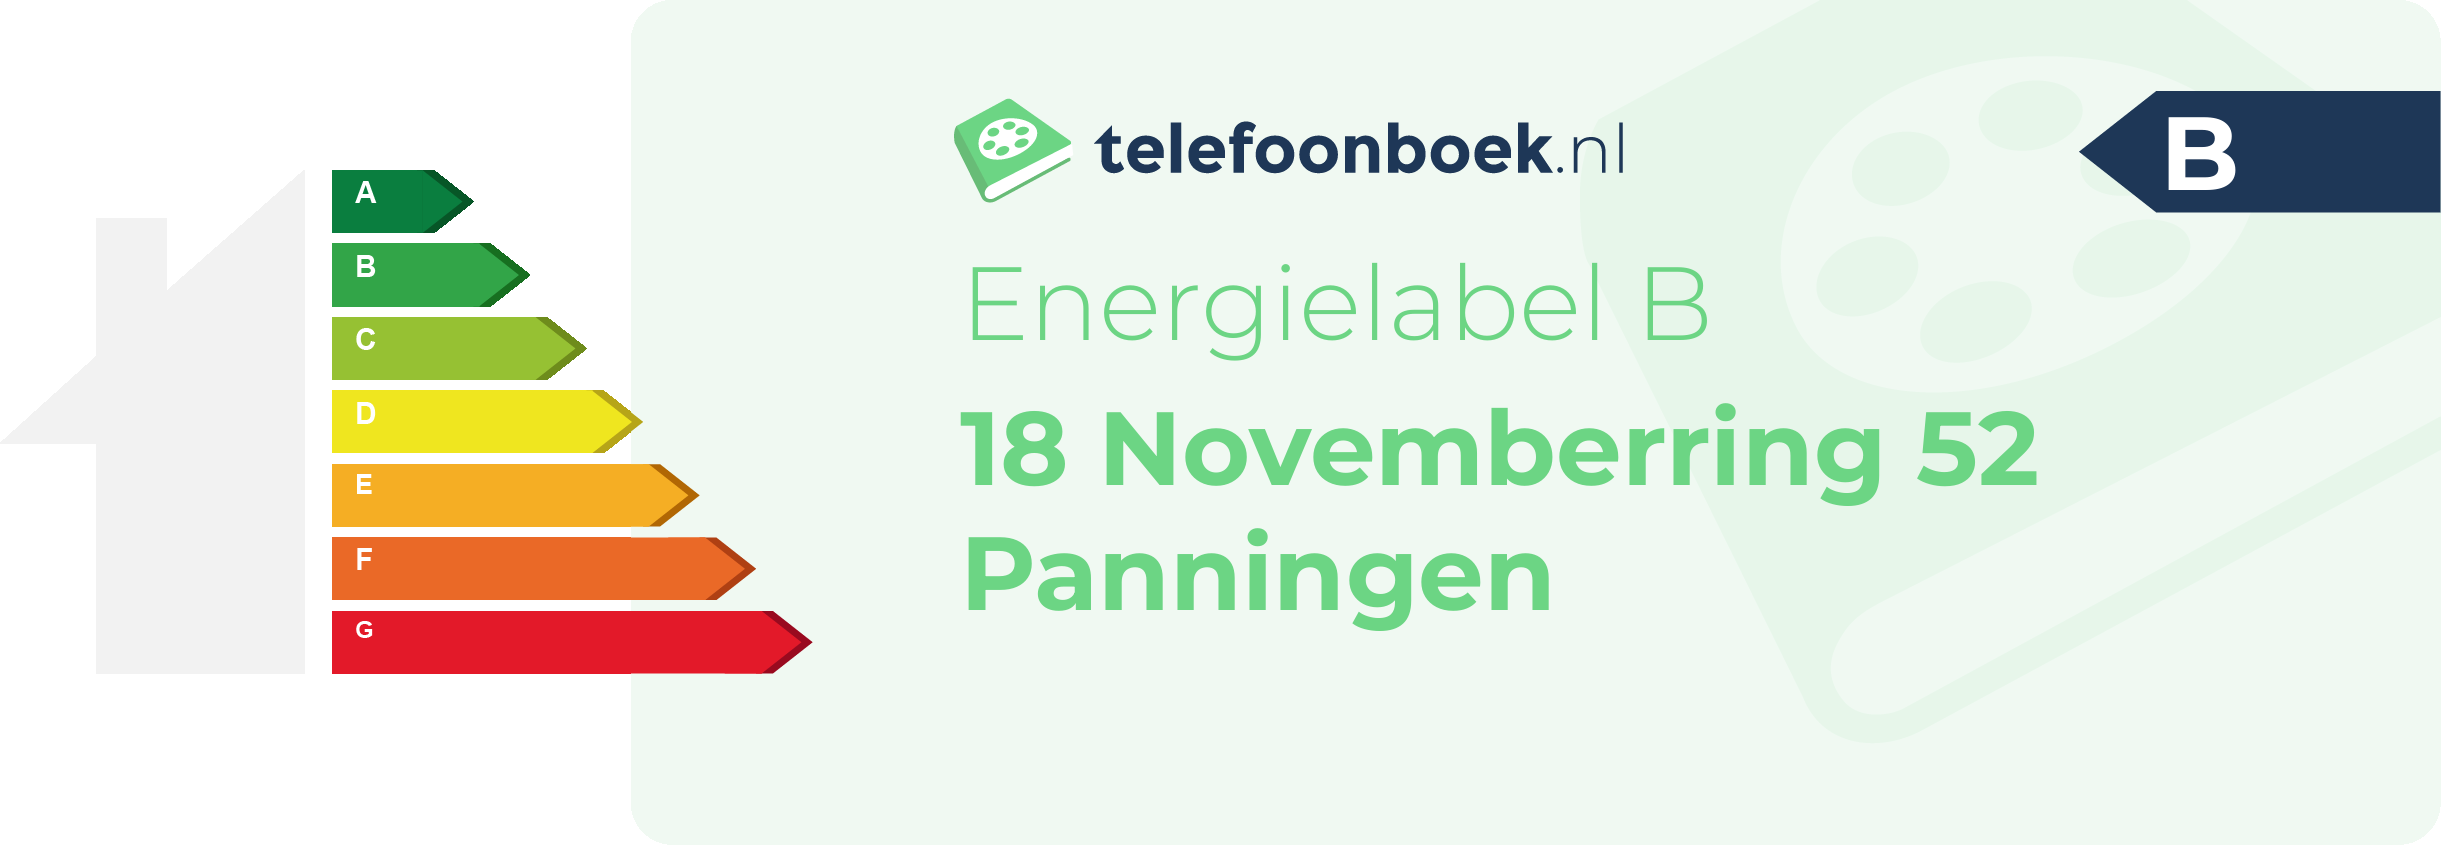 Energielabel 18 Novemberring 52 Panningen